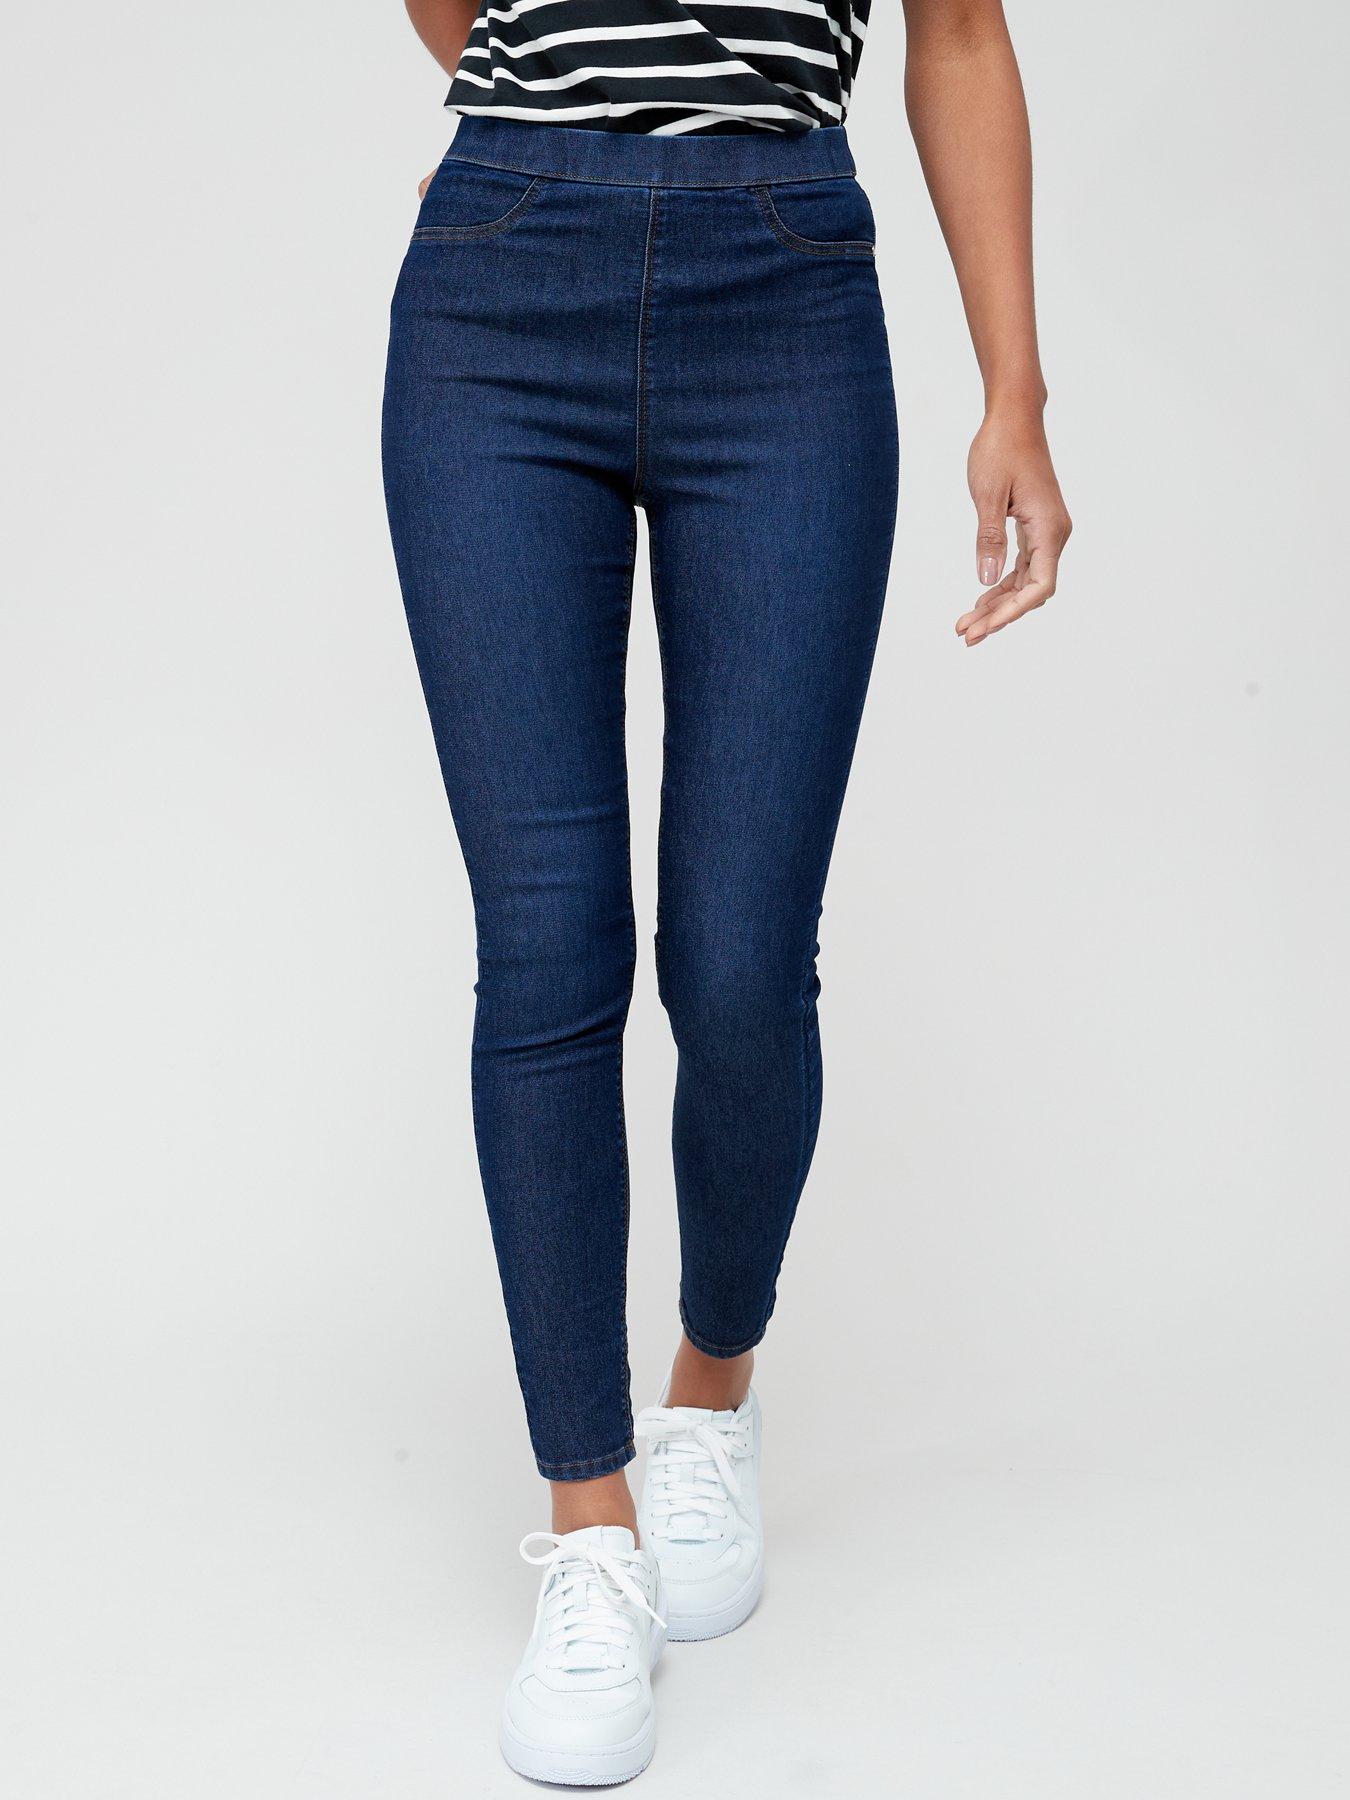 Jeggings, Women's Skinny Jeans